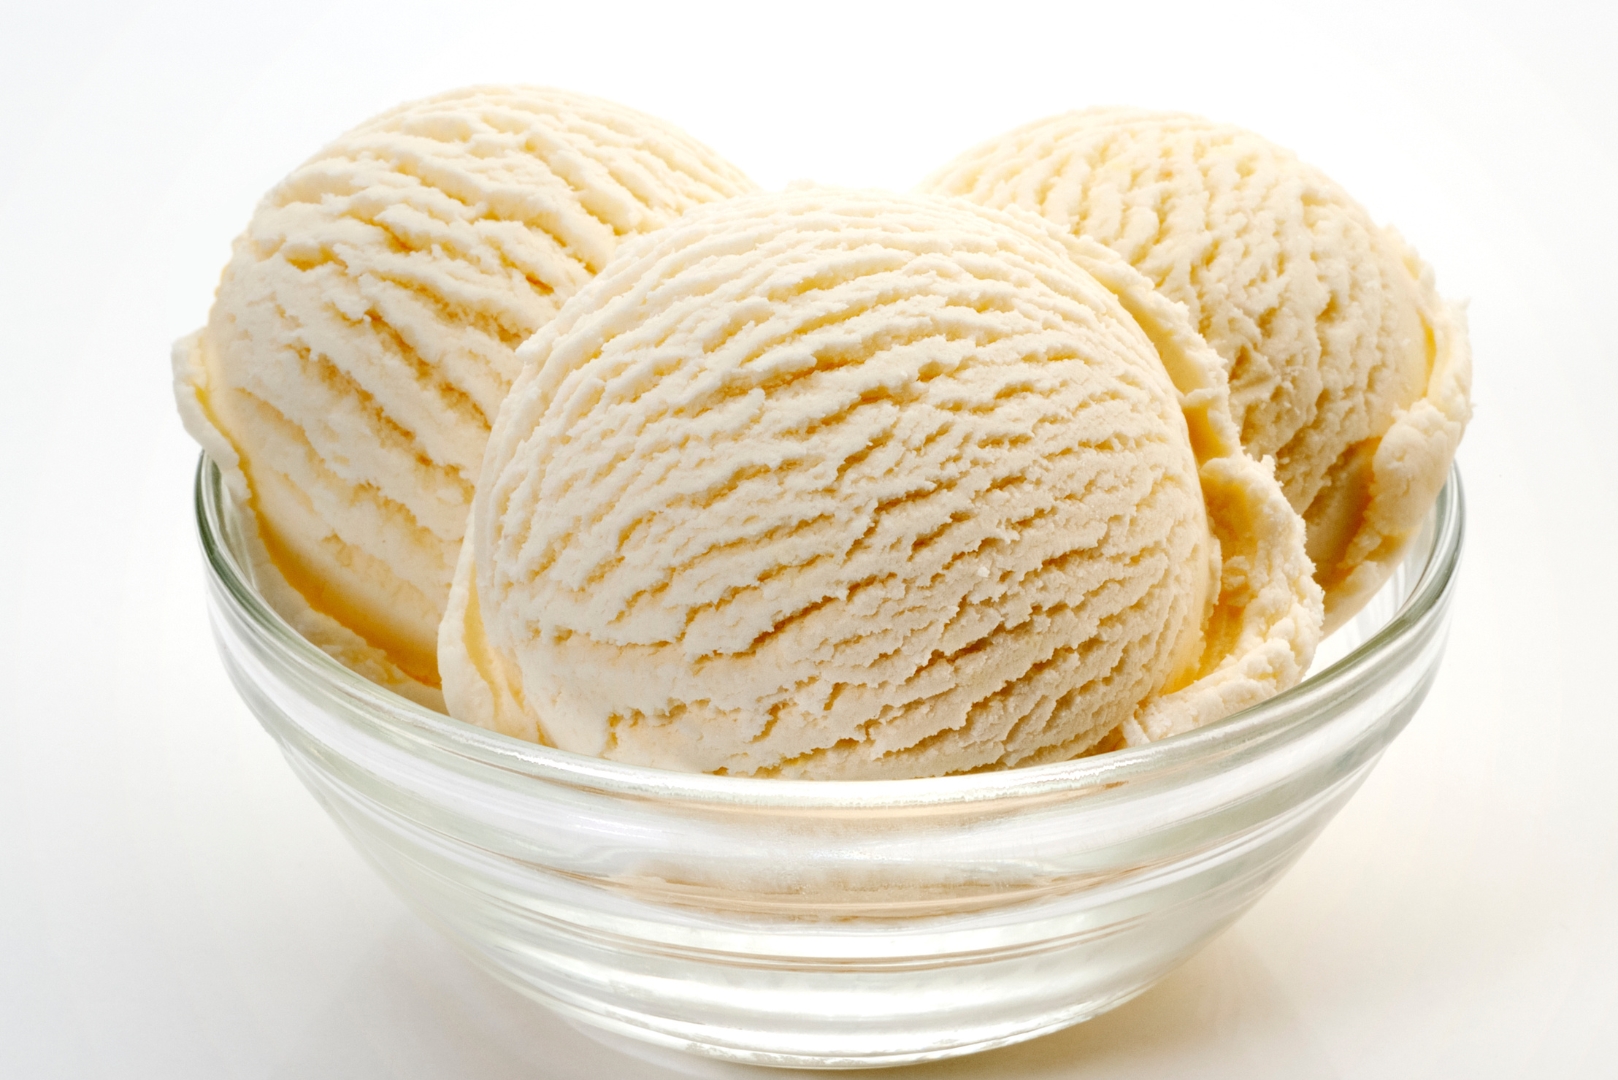 Large Yellow Ice Cream Cone Exfoliating Sponge